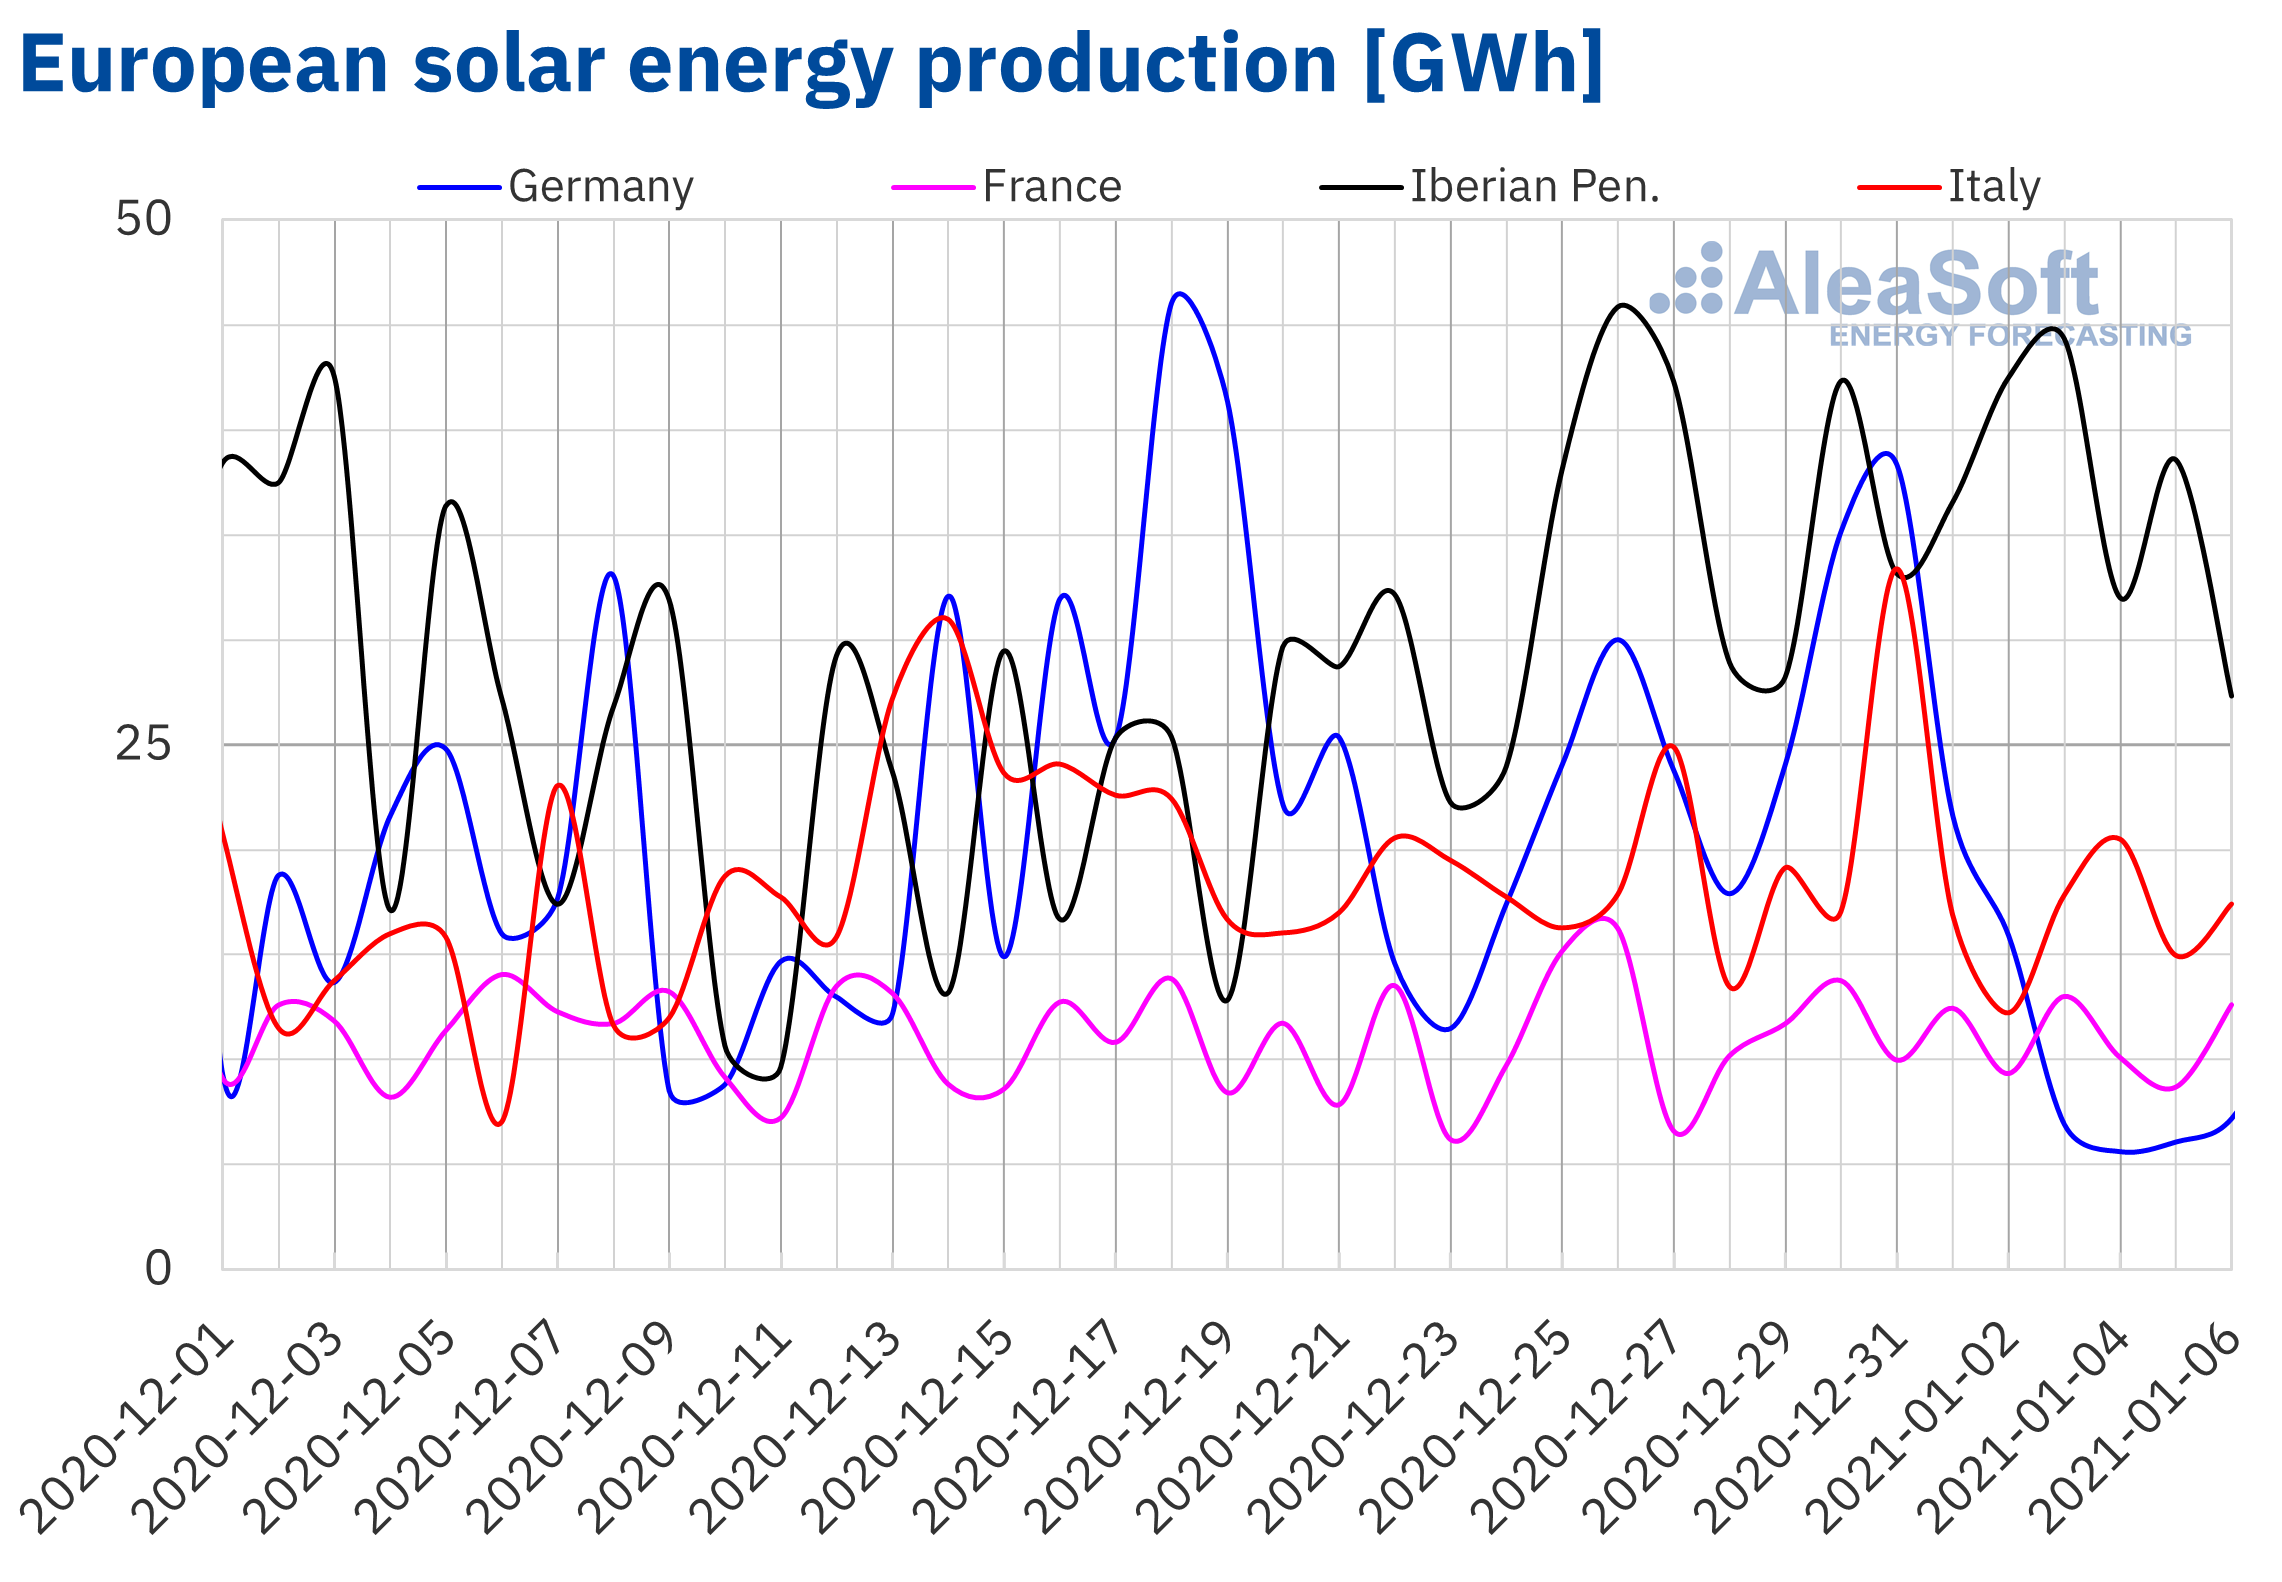 AleaSoft - Solar photovoltaic thermosolar energy production electricity Europe